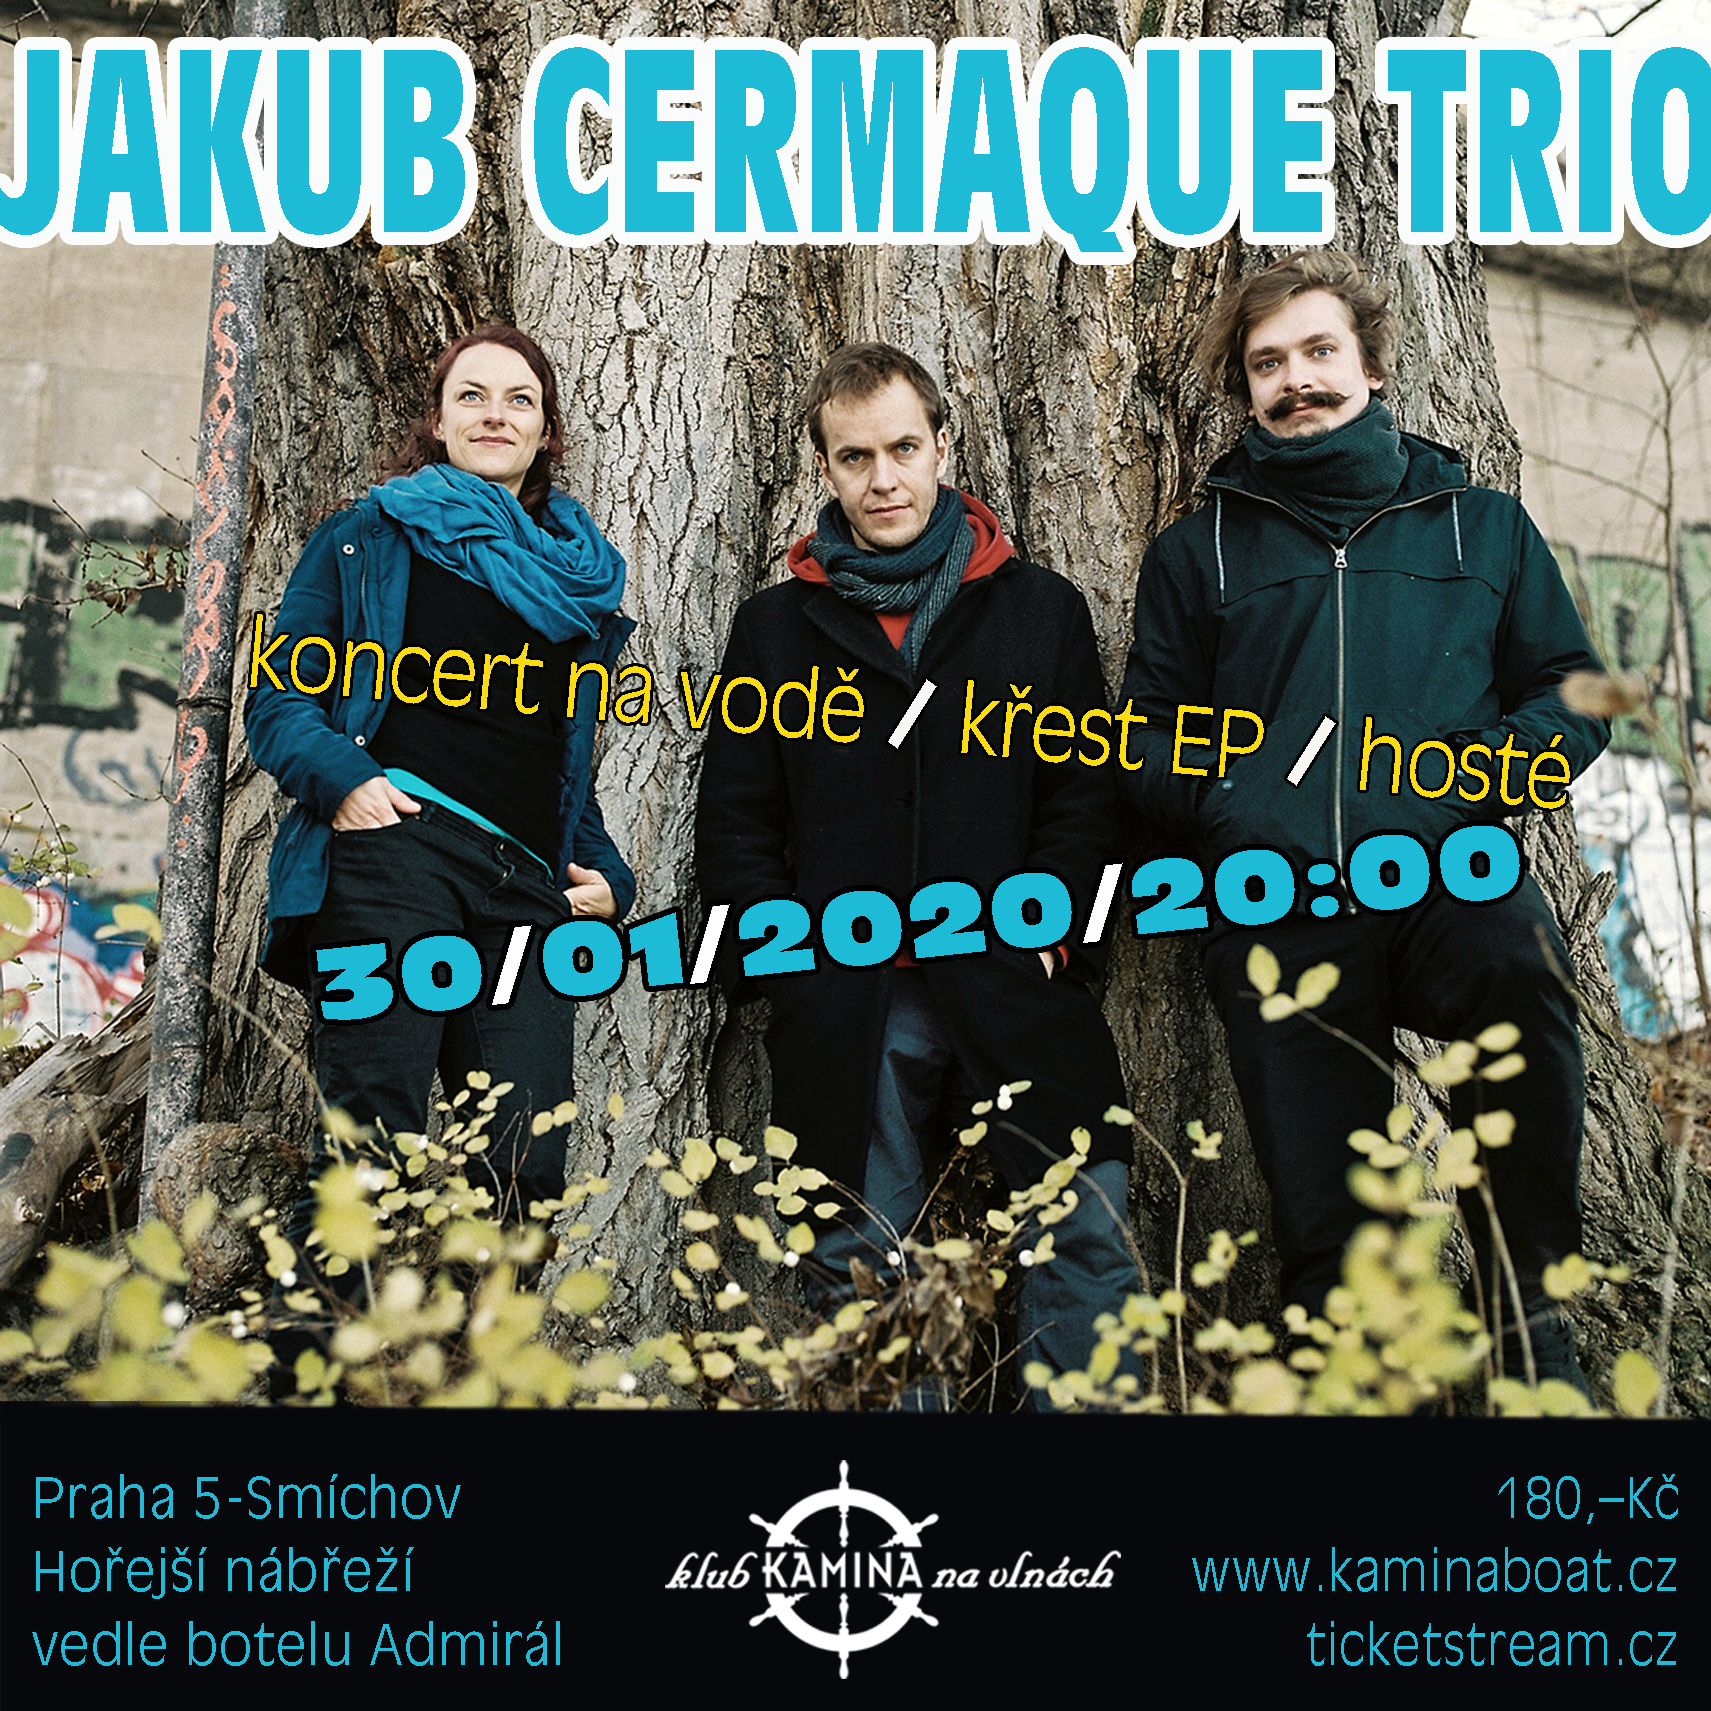 Jakub Cermaque trio  